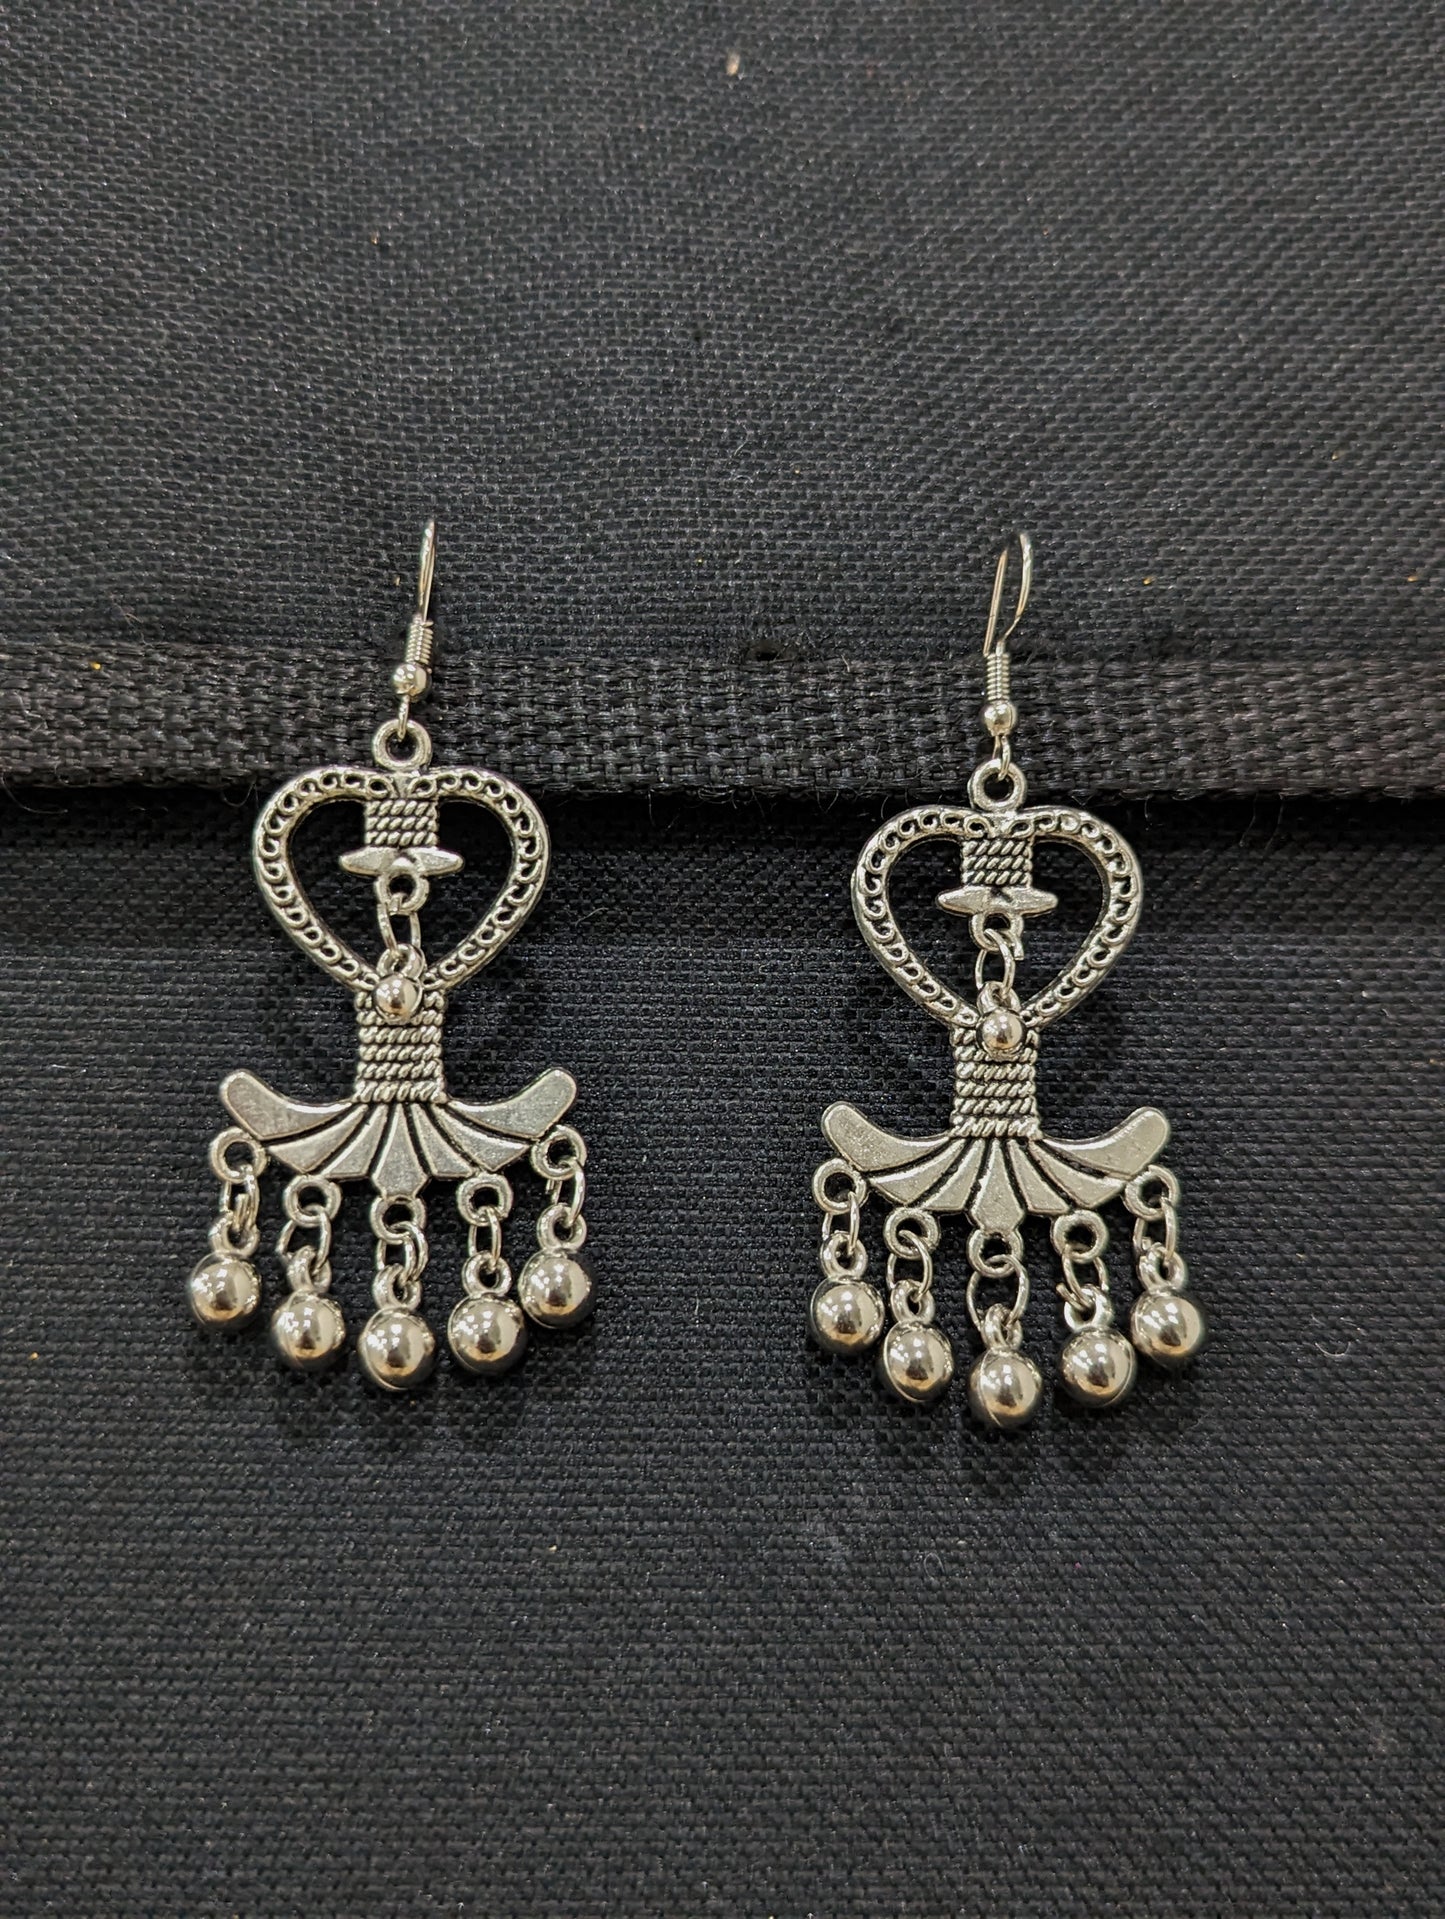 Antique silver hook drop Earrings - 6 designs